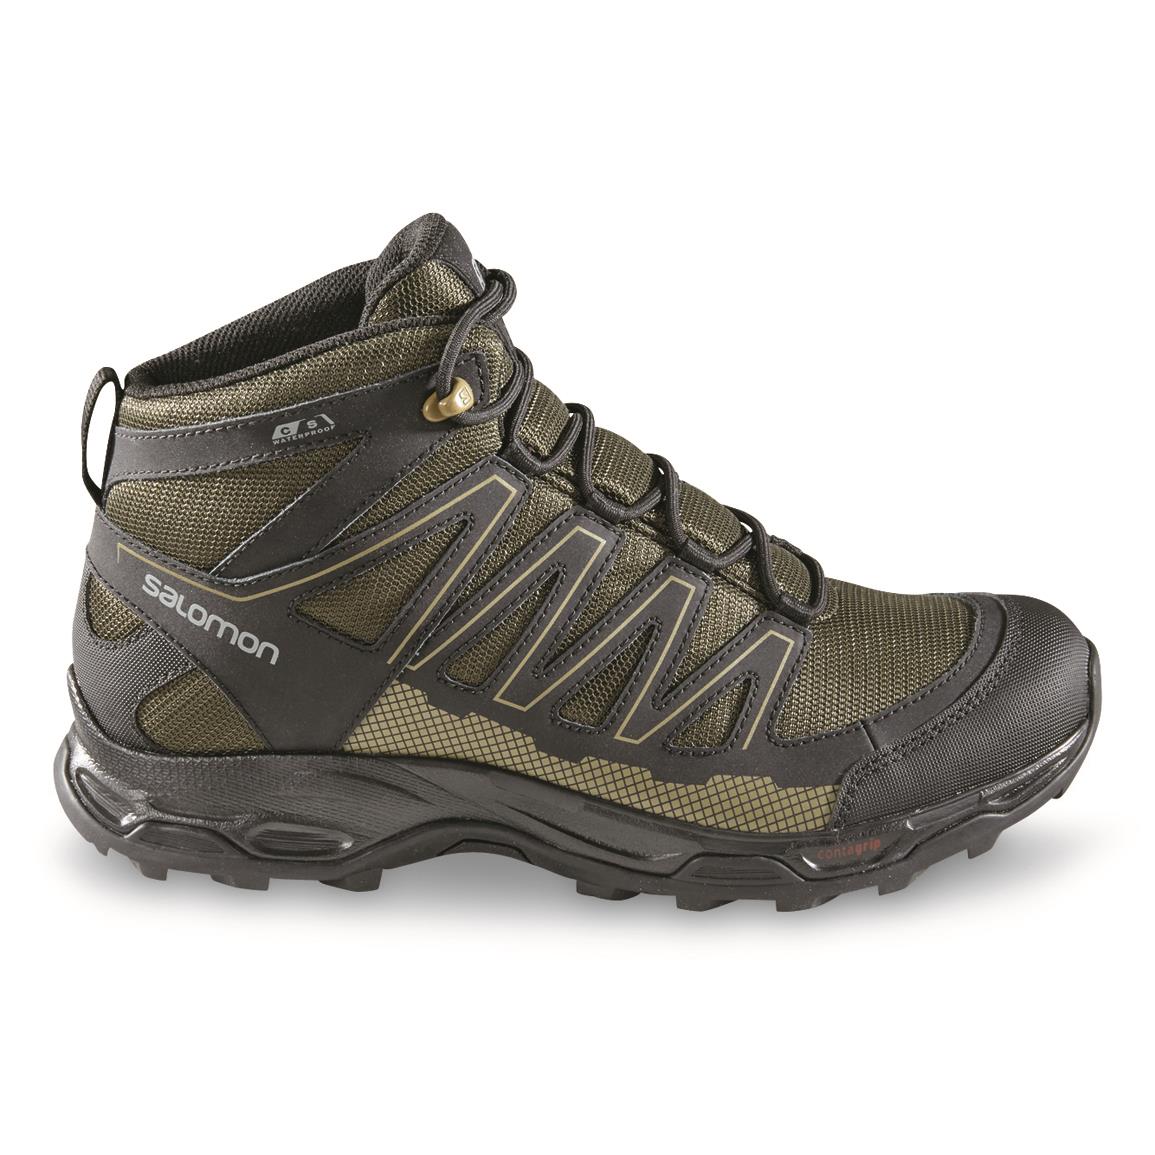 salomon men's pathfinder waterproof hiking shoes